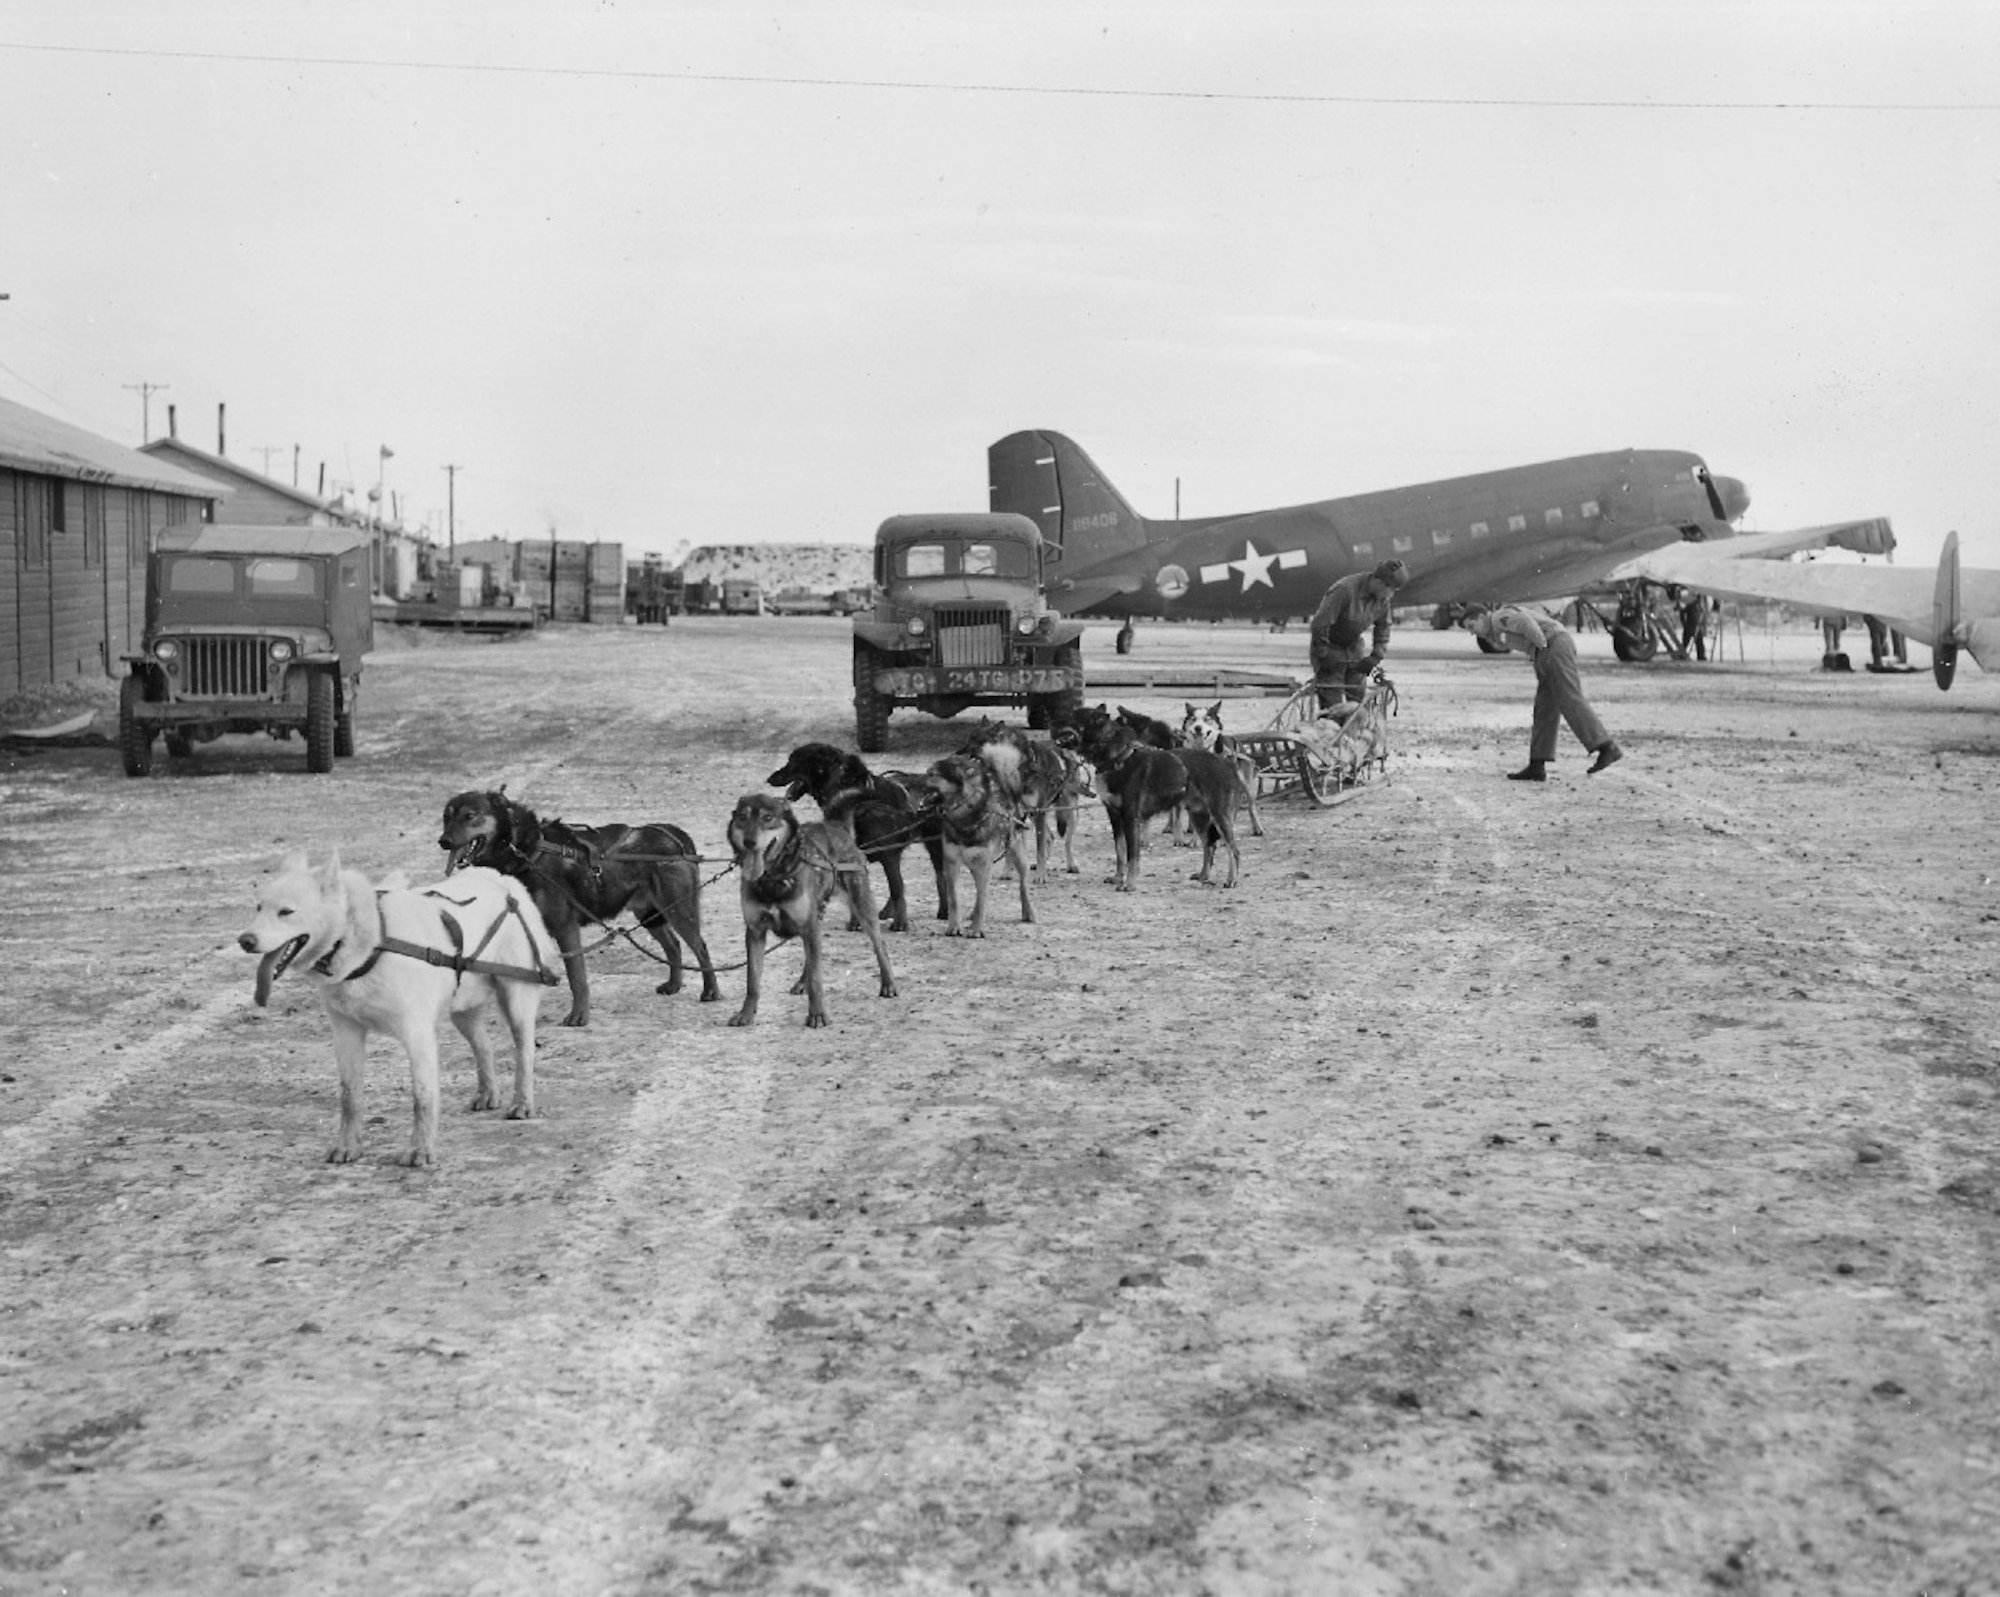 A team of military working dogs rests outside a Douglas C-47 Skytrain circa 1945 at Ladd Field, Fairbanks, Alaska. (Photo courtesy of University of Alaska, Fairbanks, archives)